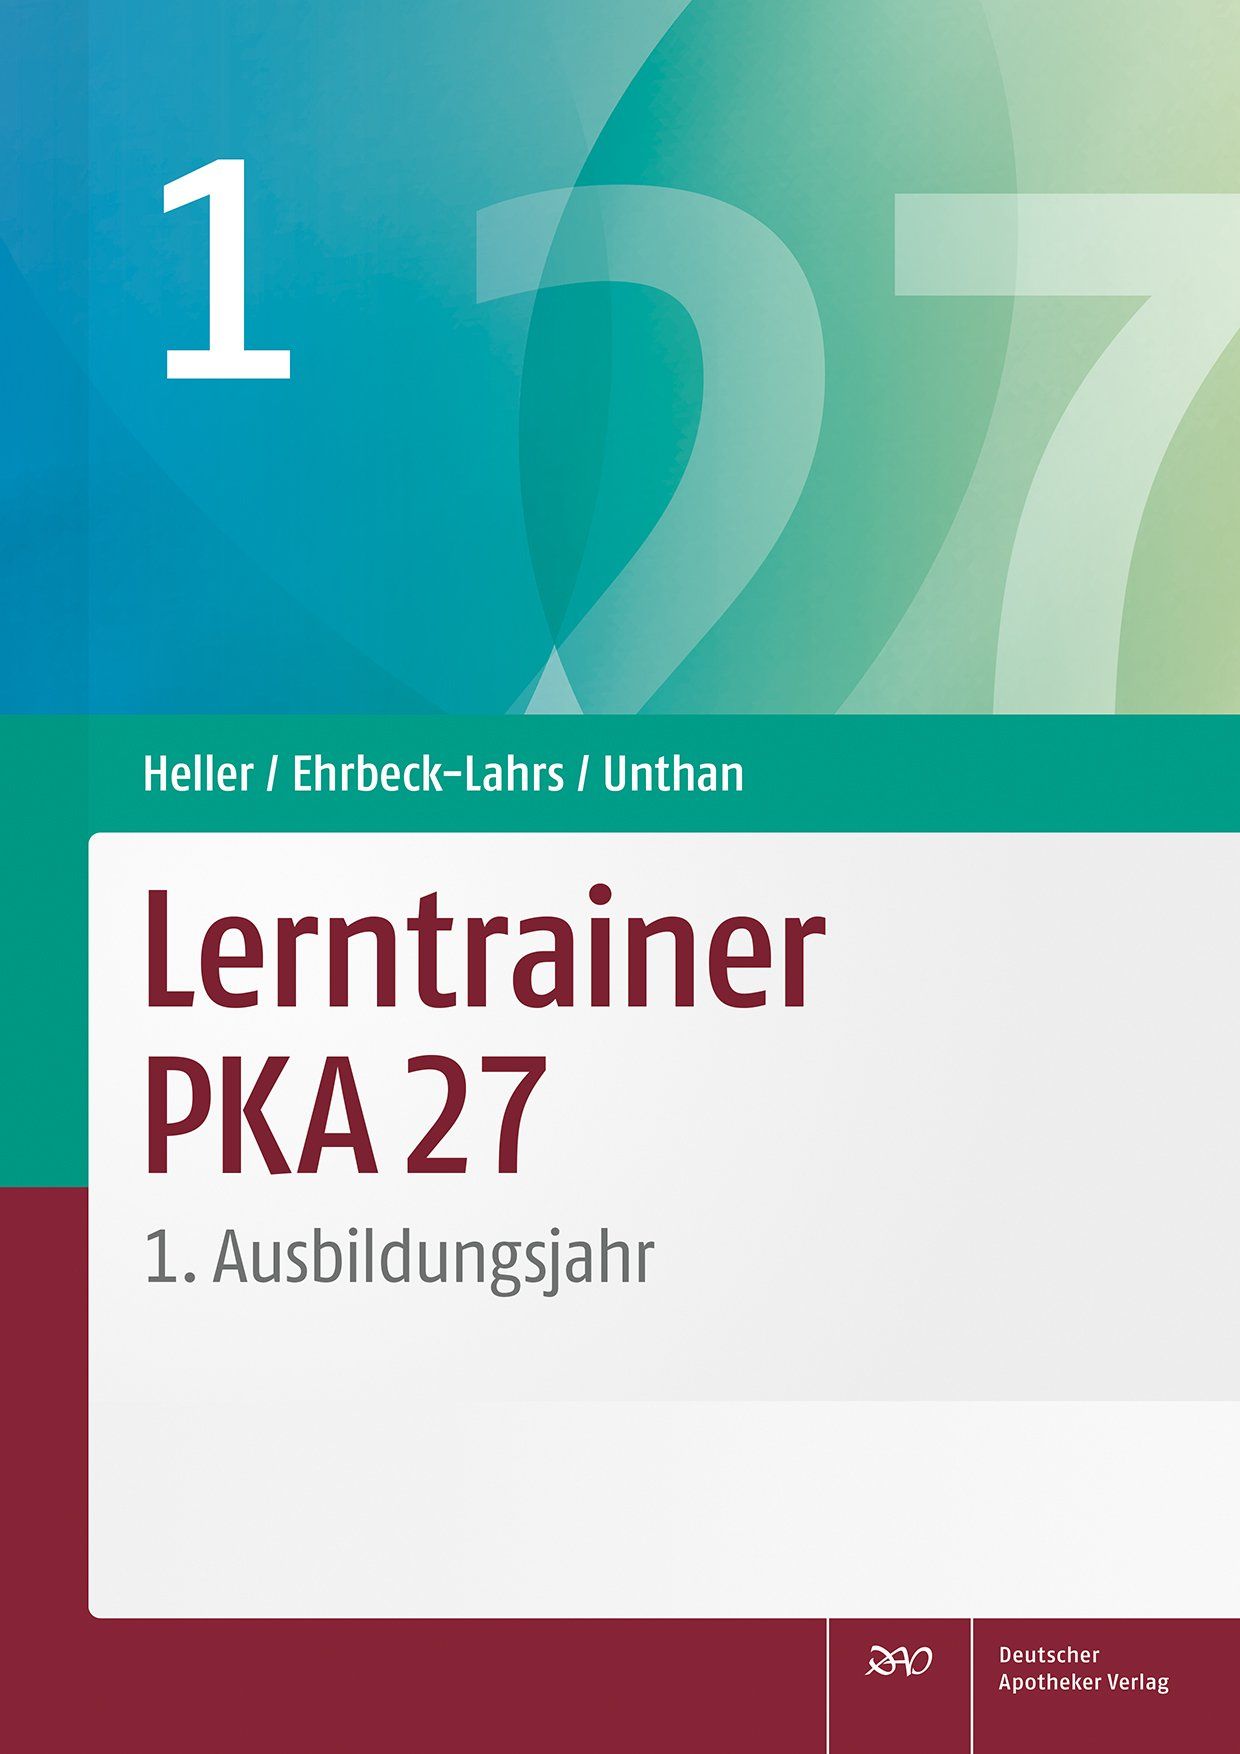 Lerntrainer PKA 27 1